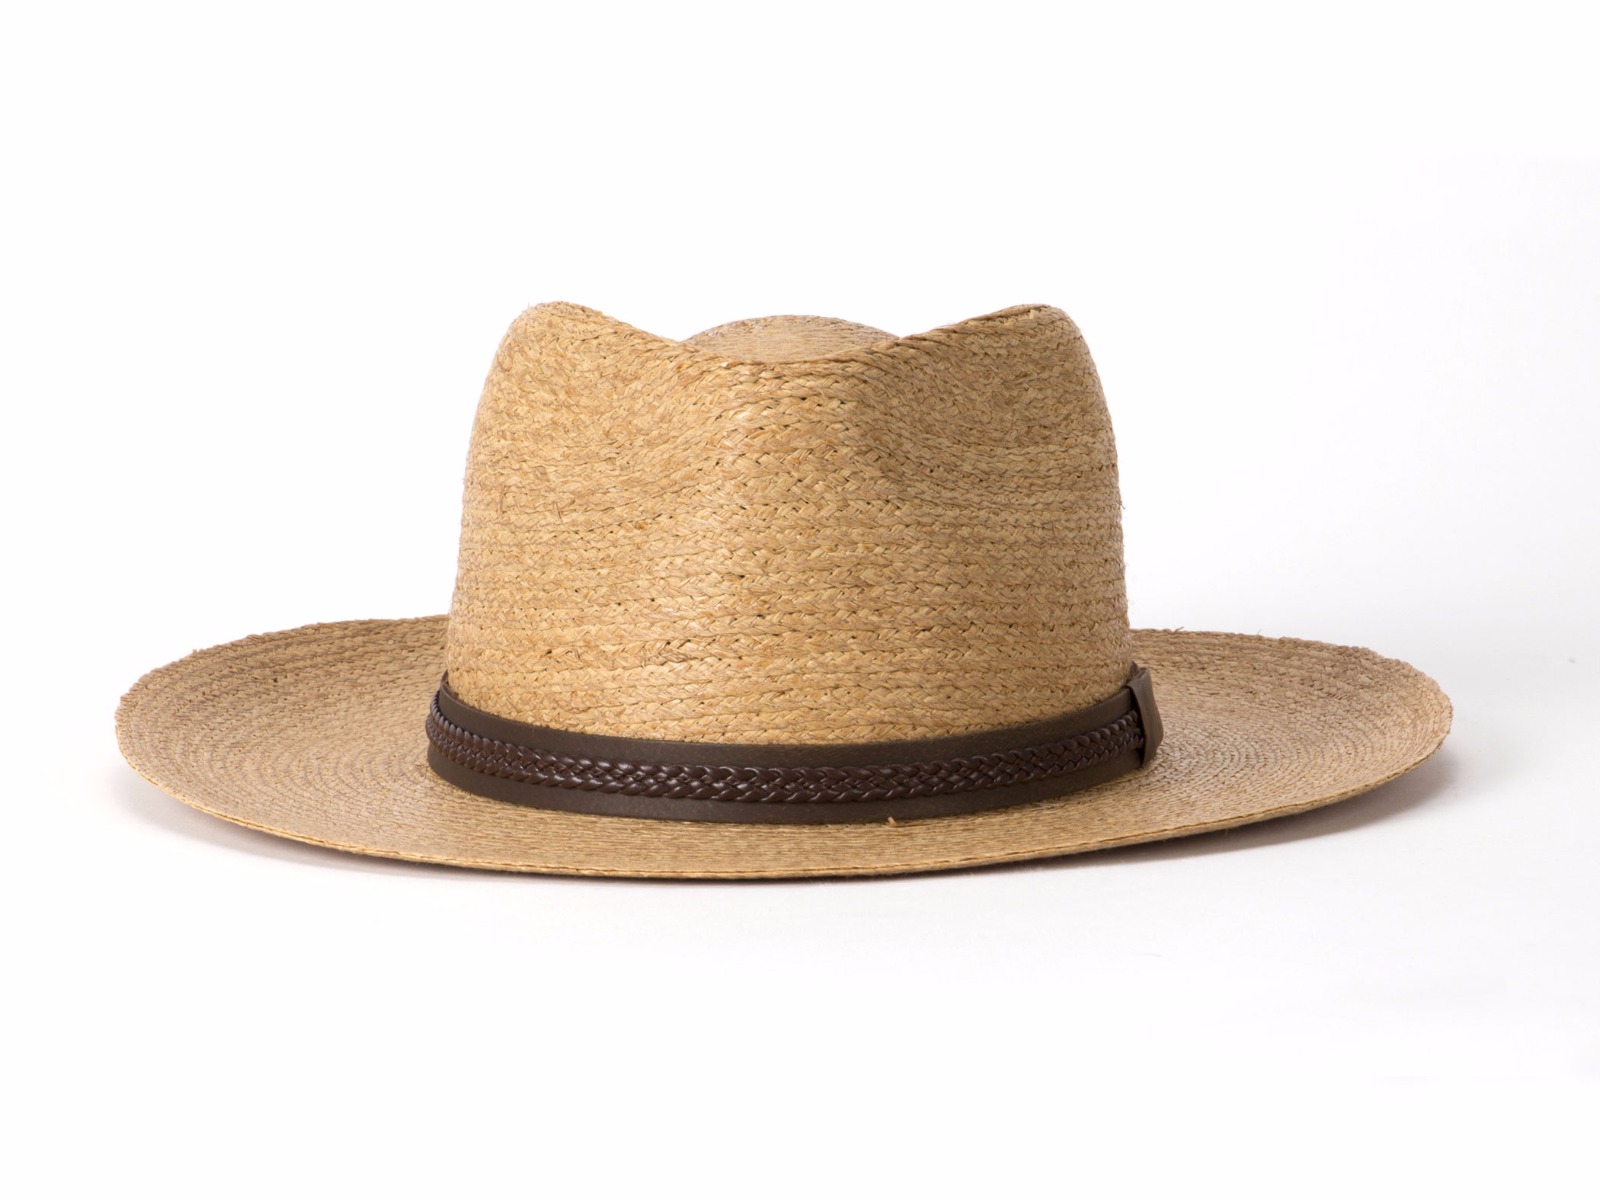 R11 Charlie Fedora - Unisex sun hat for all adventures | Tilley